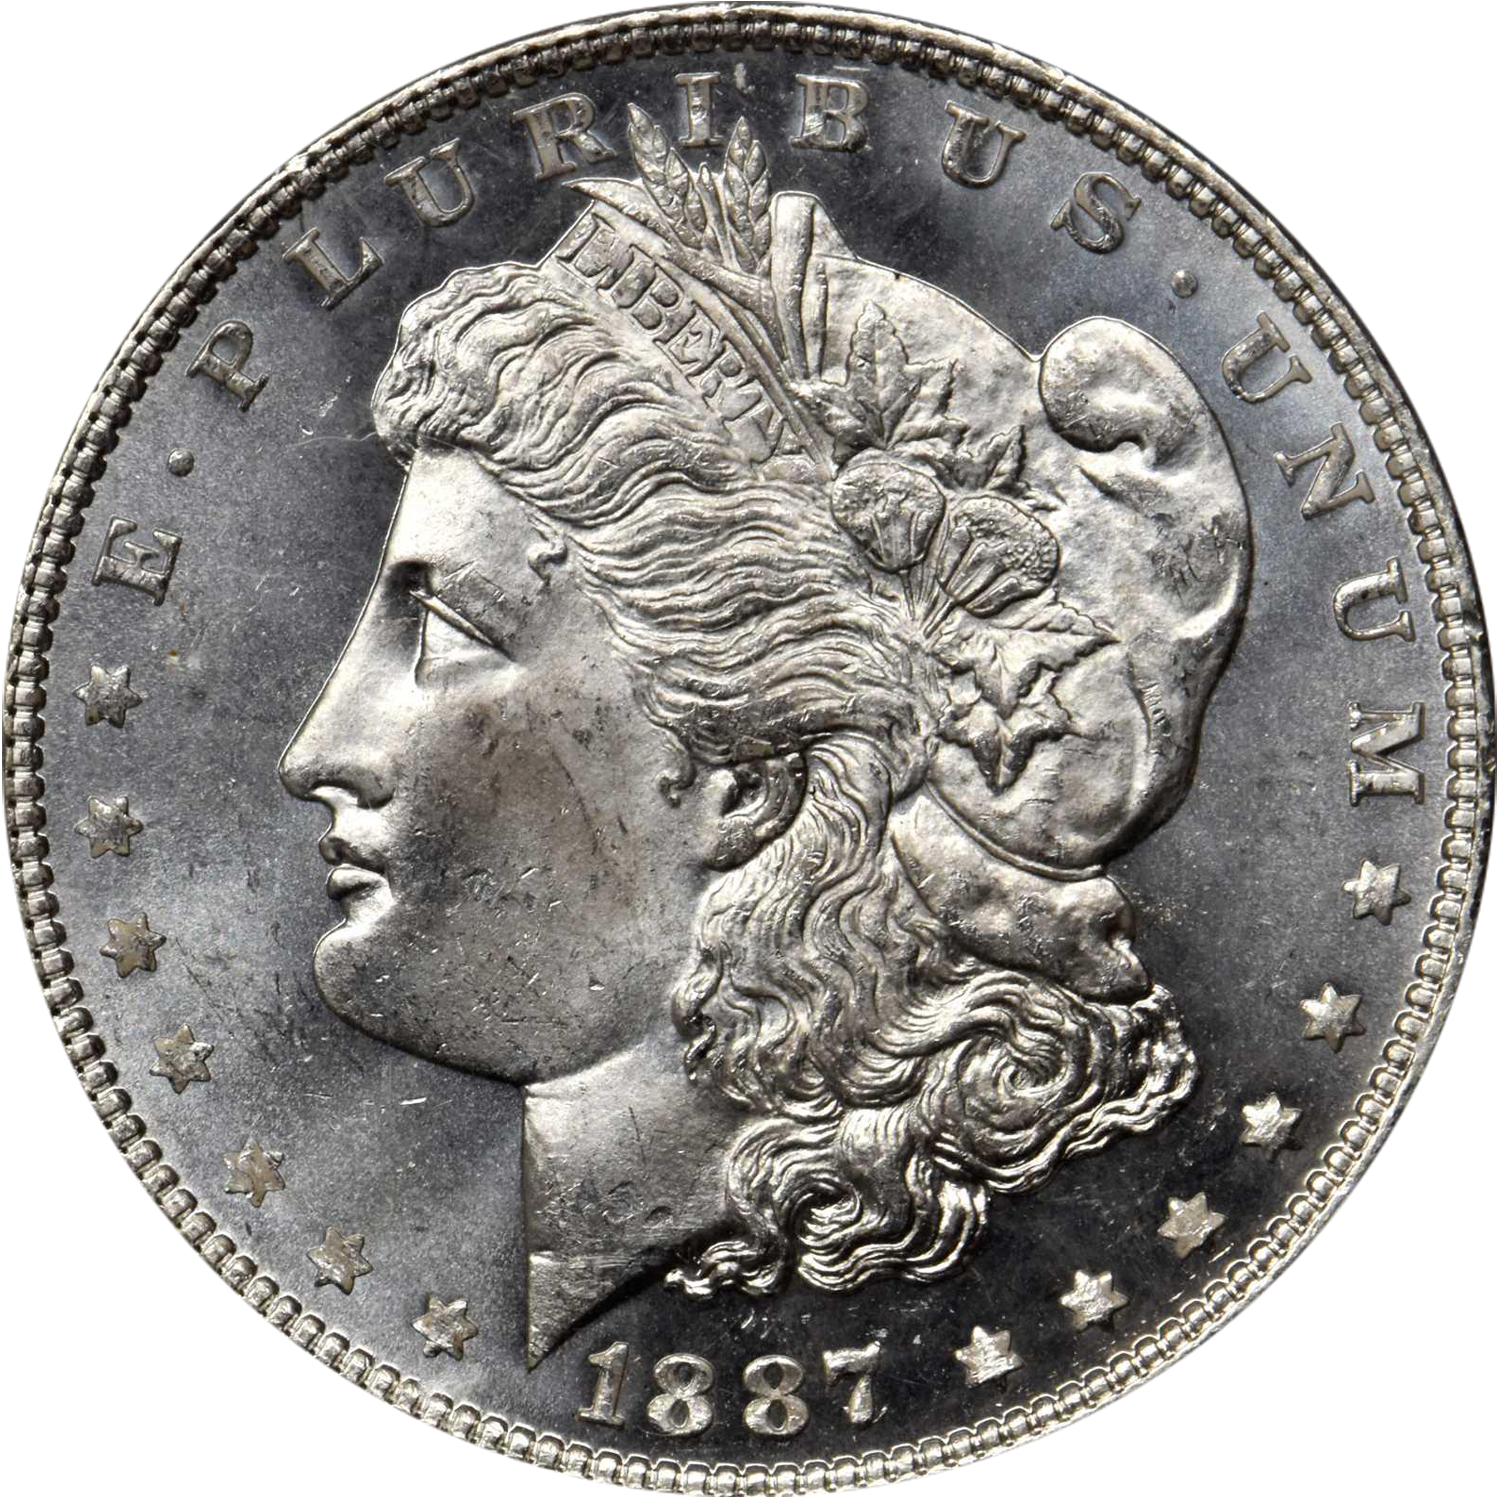 1887/6 overdate philadelphia morgan dollar price guide value